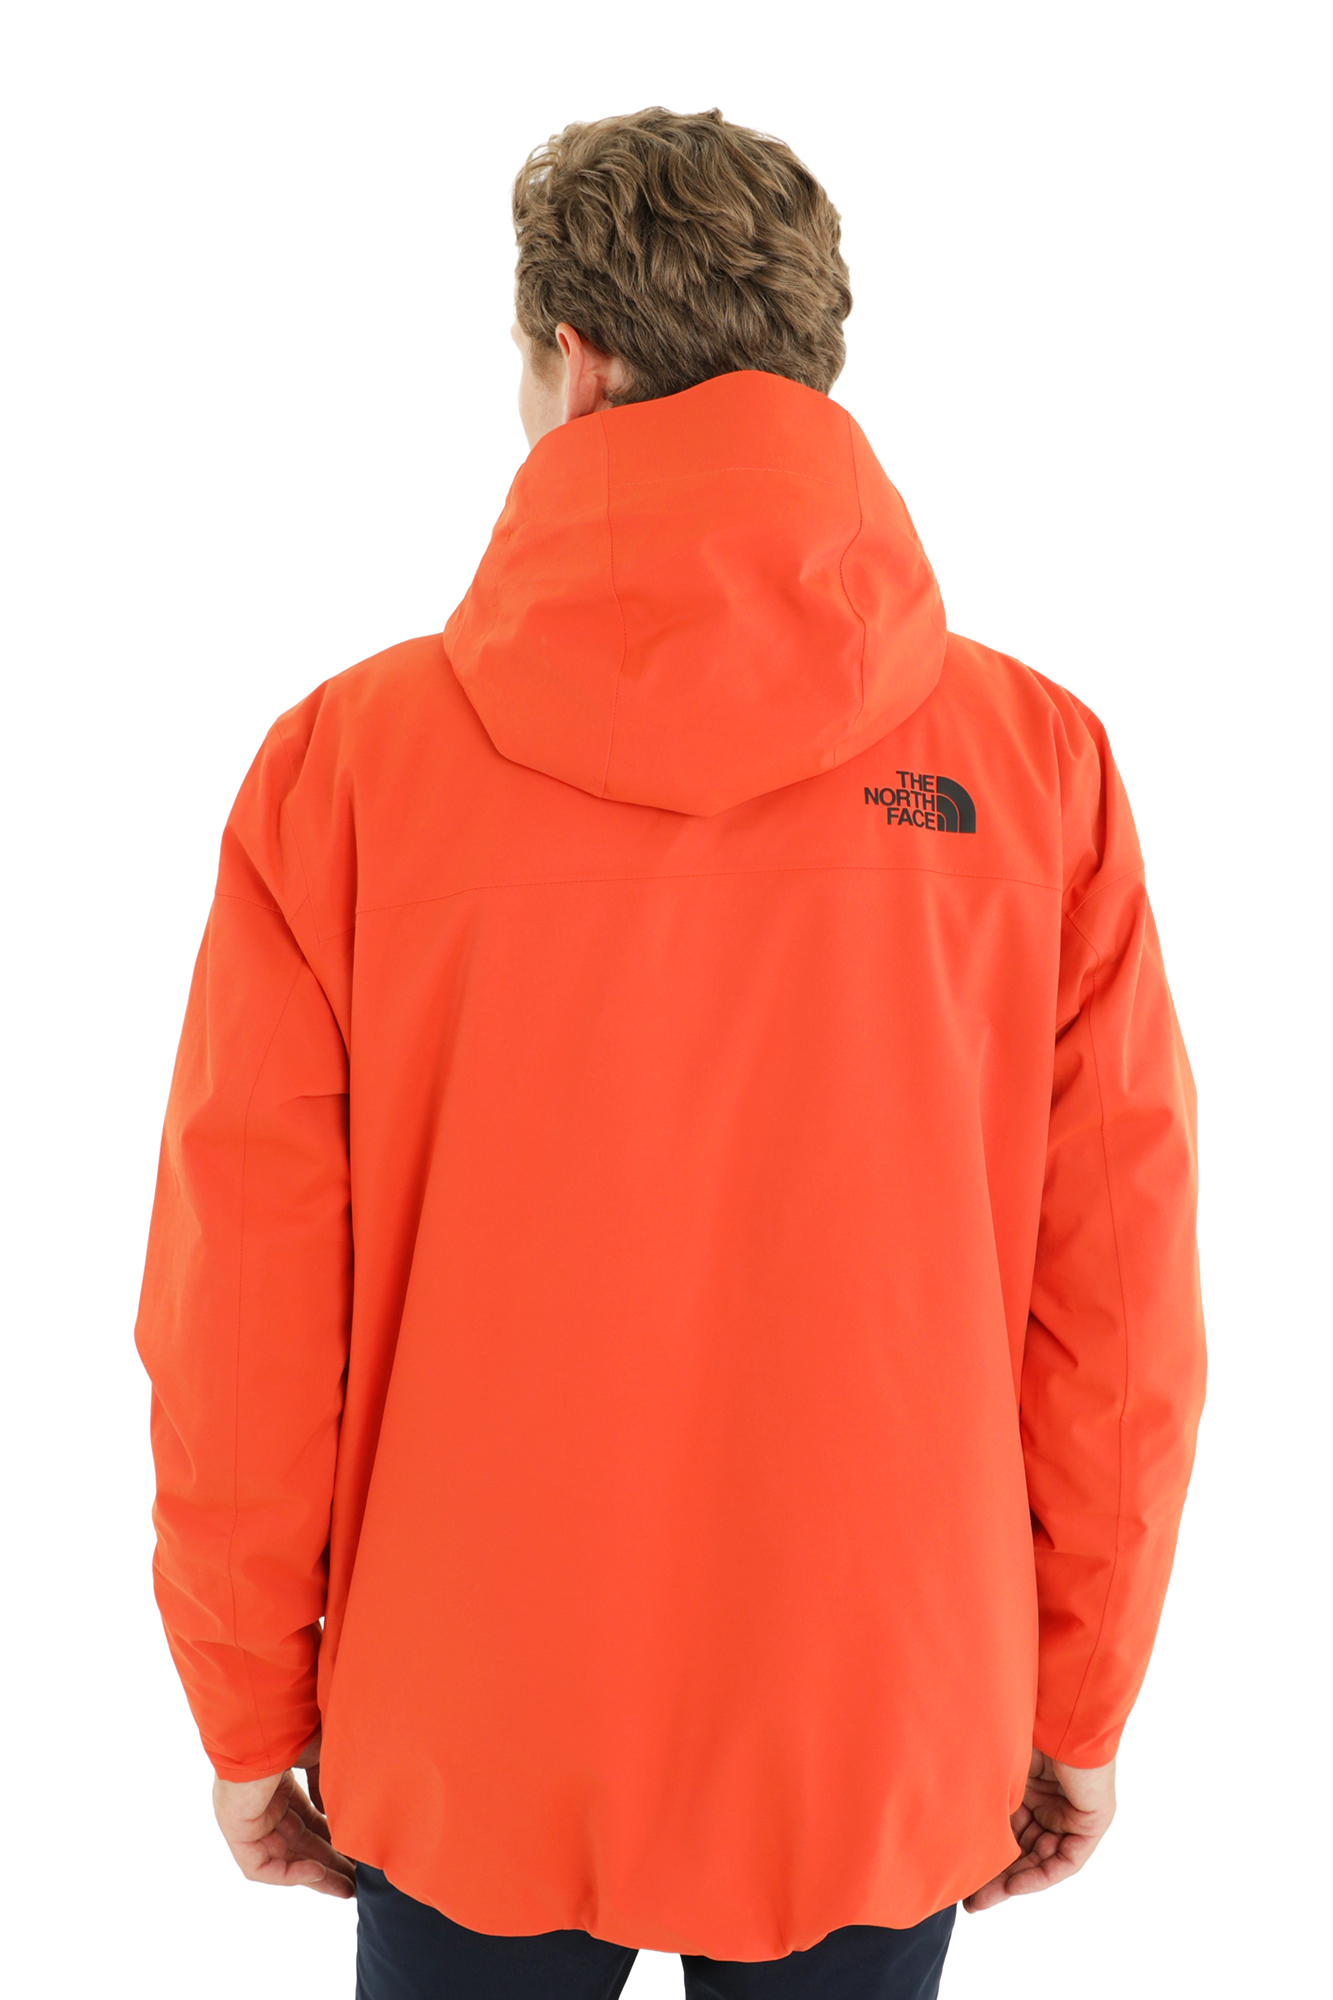 Куртка горнолыжная The North Face Chakal Jkt M Burnt Ochre - купить, цена  36890 руб, отзывы на КАНТе